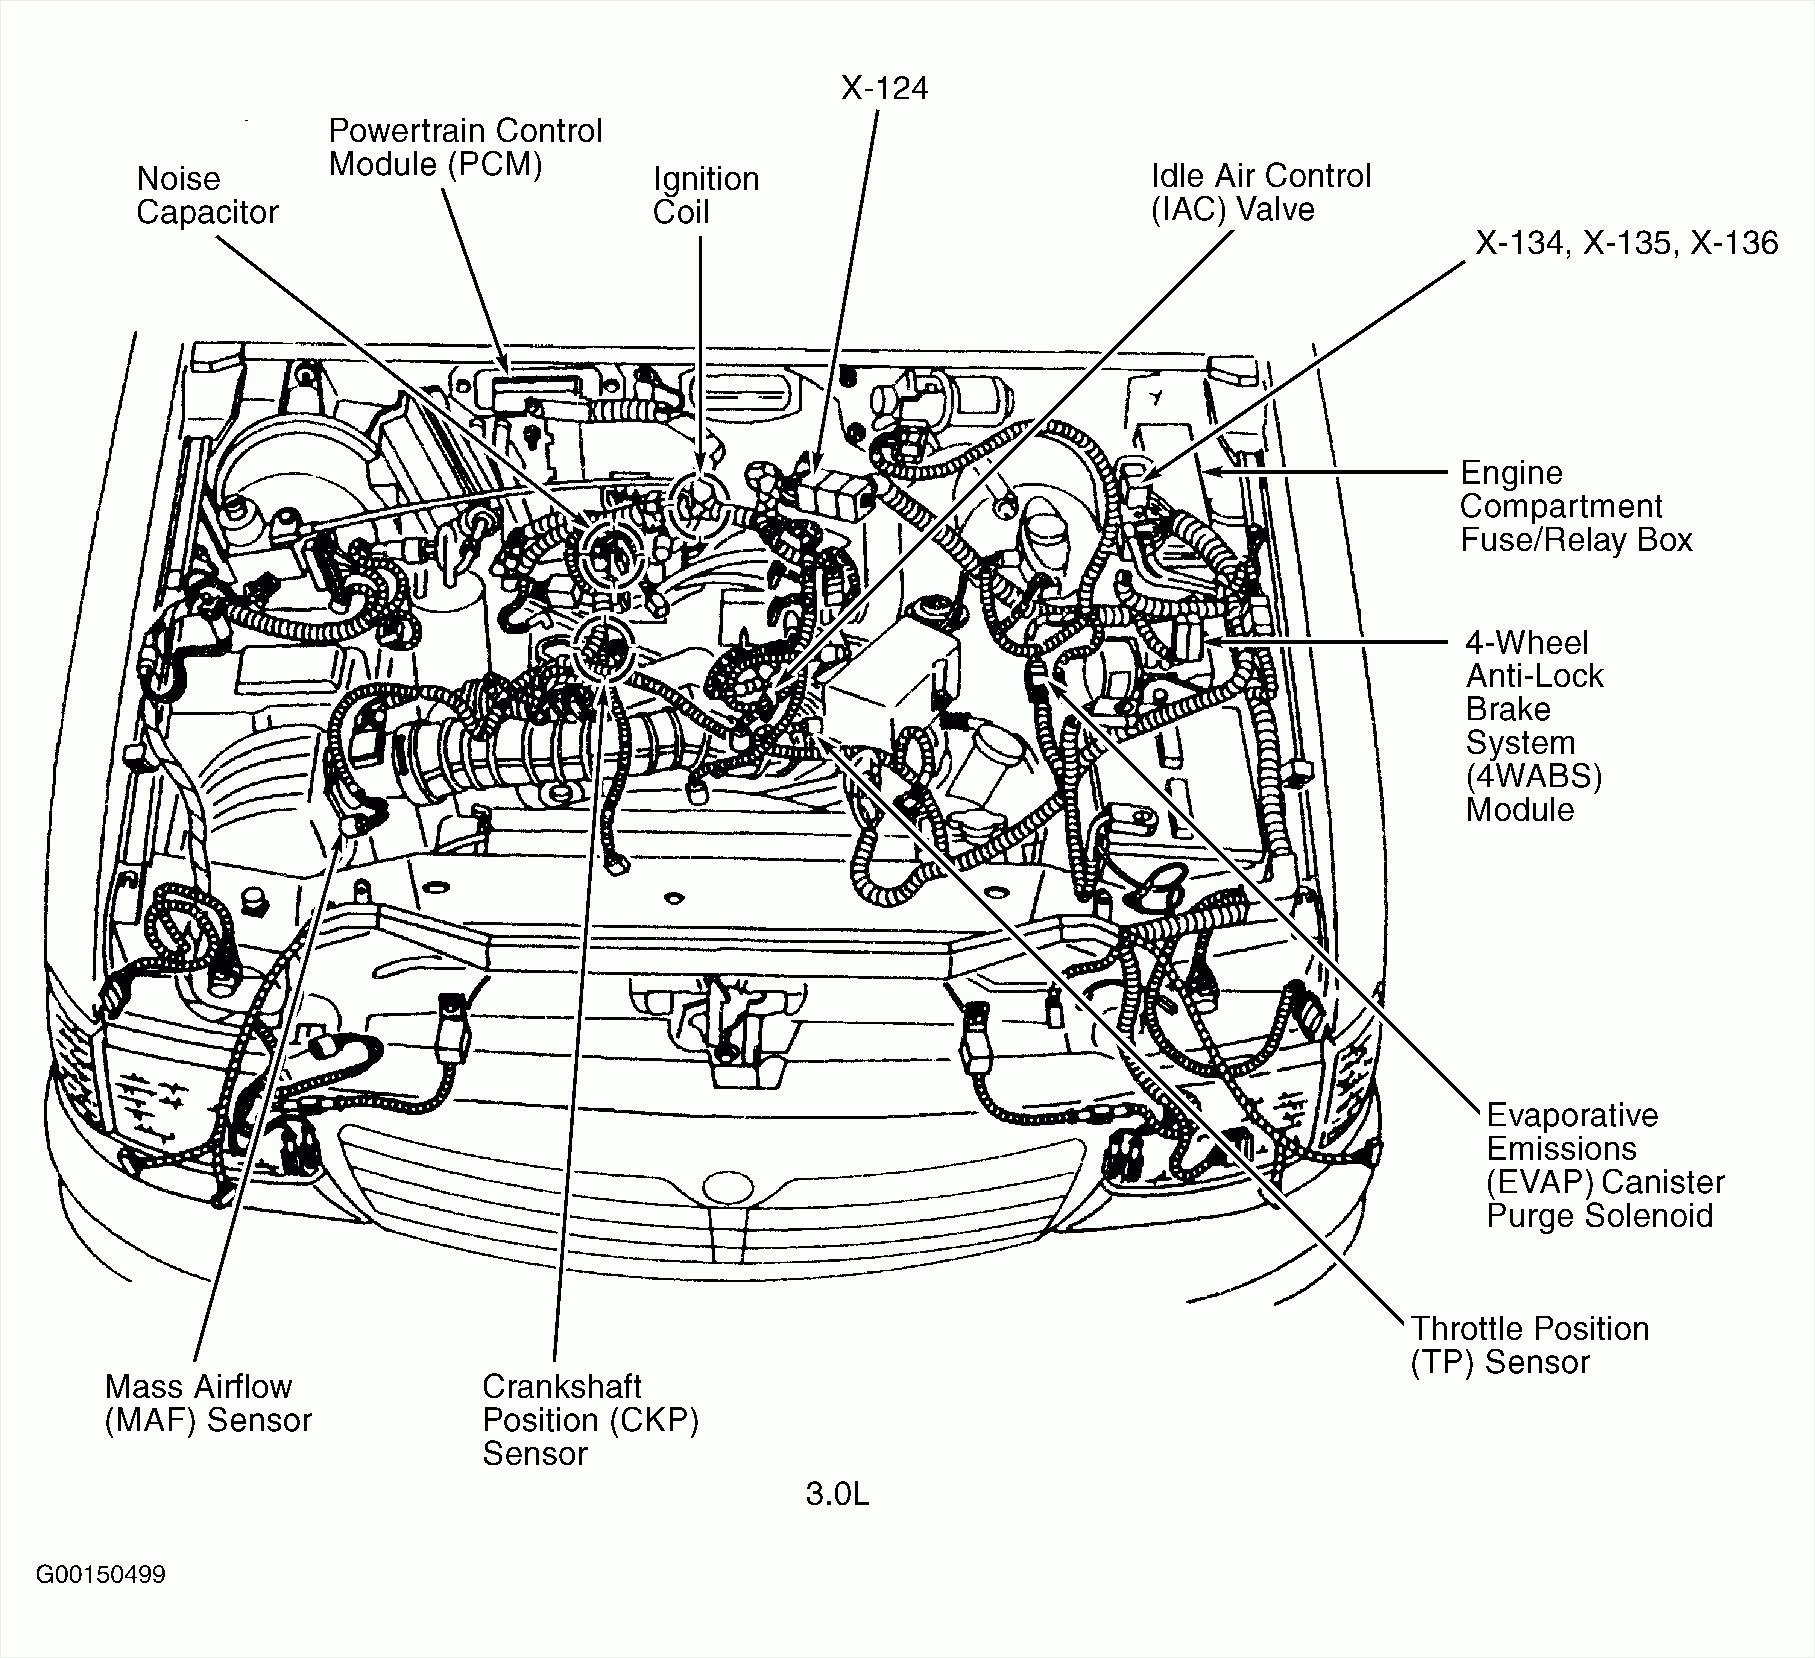 2002 ford F150 V6 Engine Diagram 2004 Mazda 6 V6 Engine Diagram Wiring Diagram Explained A Of 2002 ford F150 V6 Engine Diagram